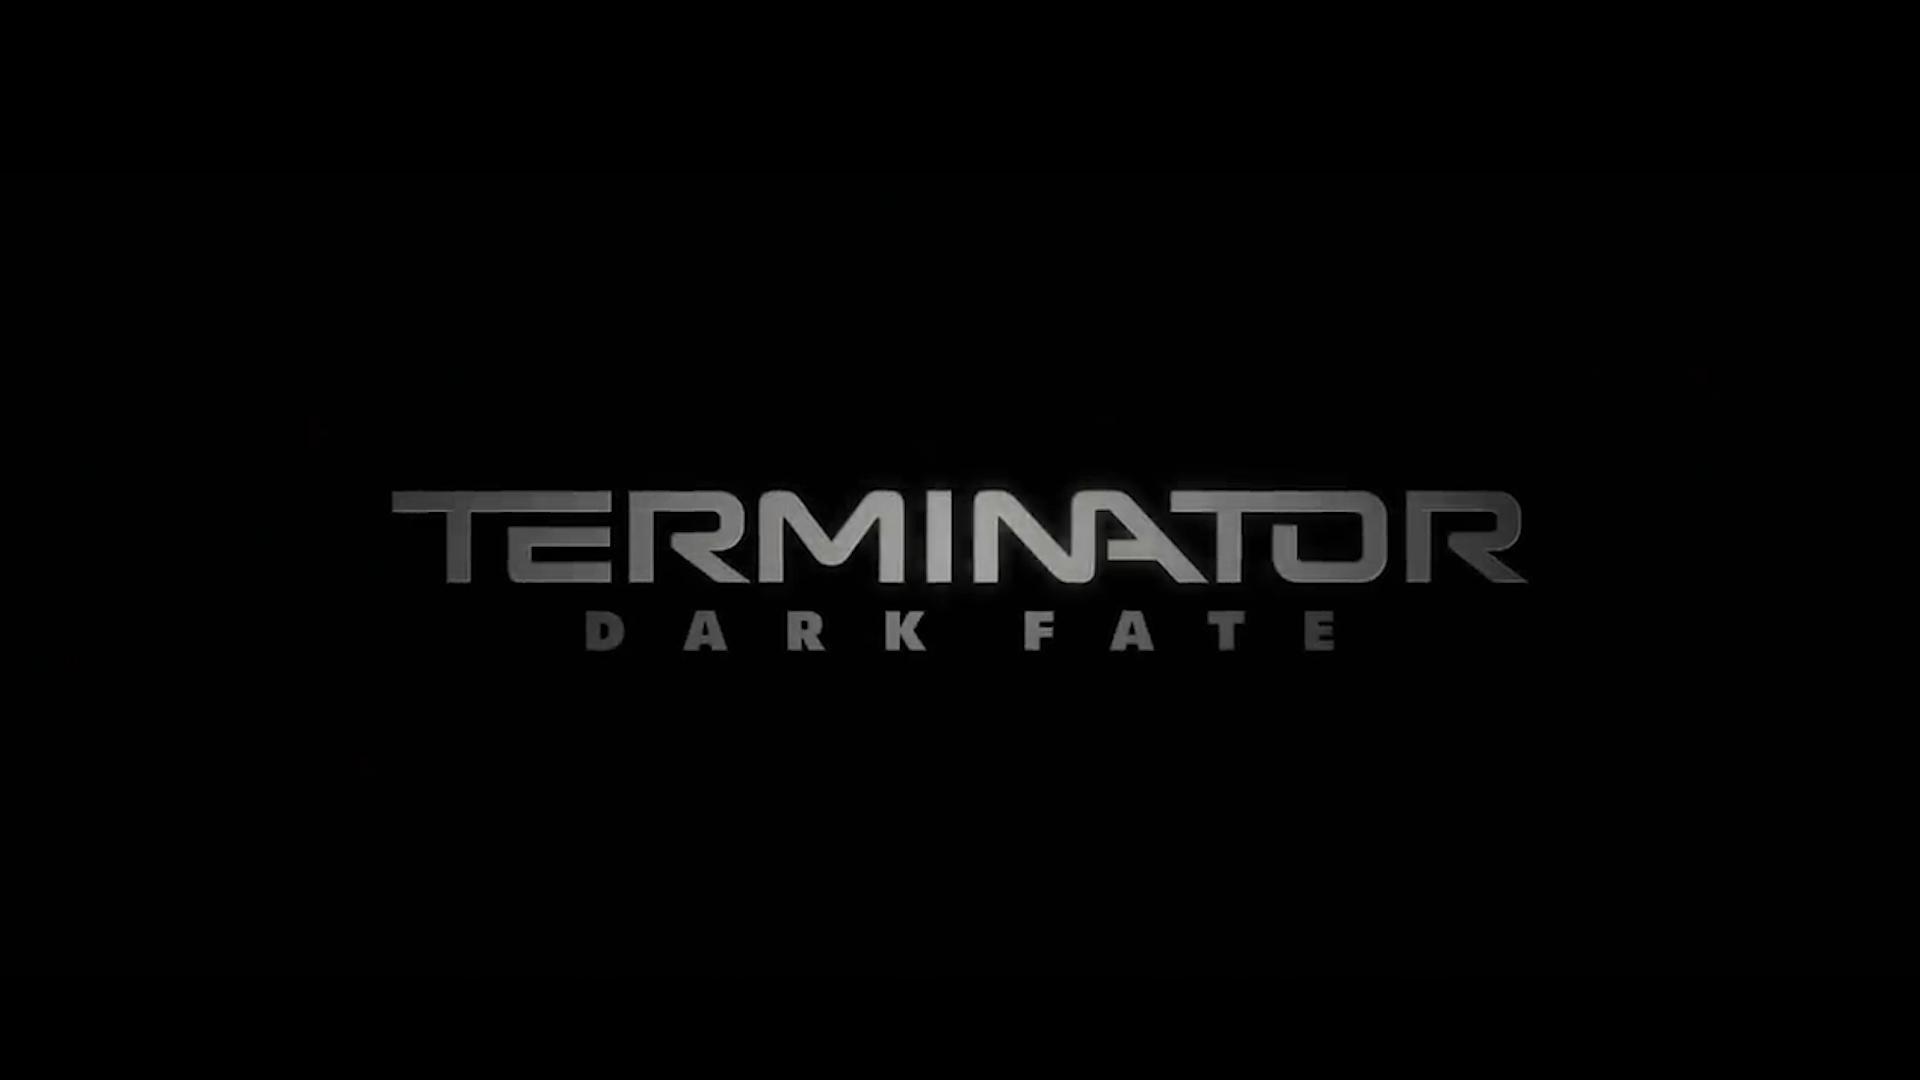 ‘Terminator: Dark Fate’ official teaser trailer